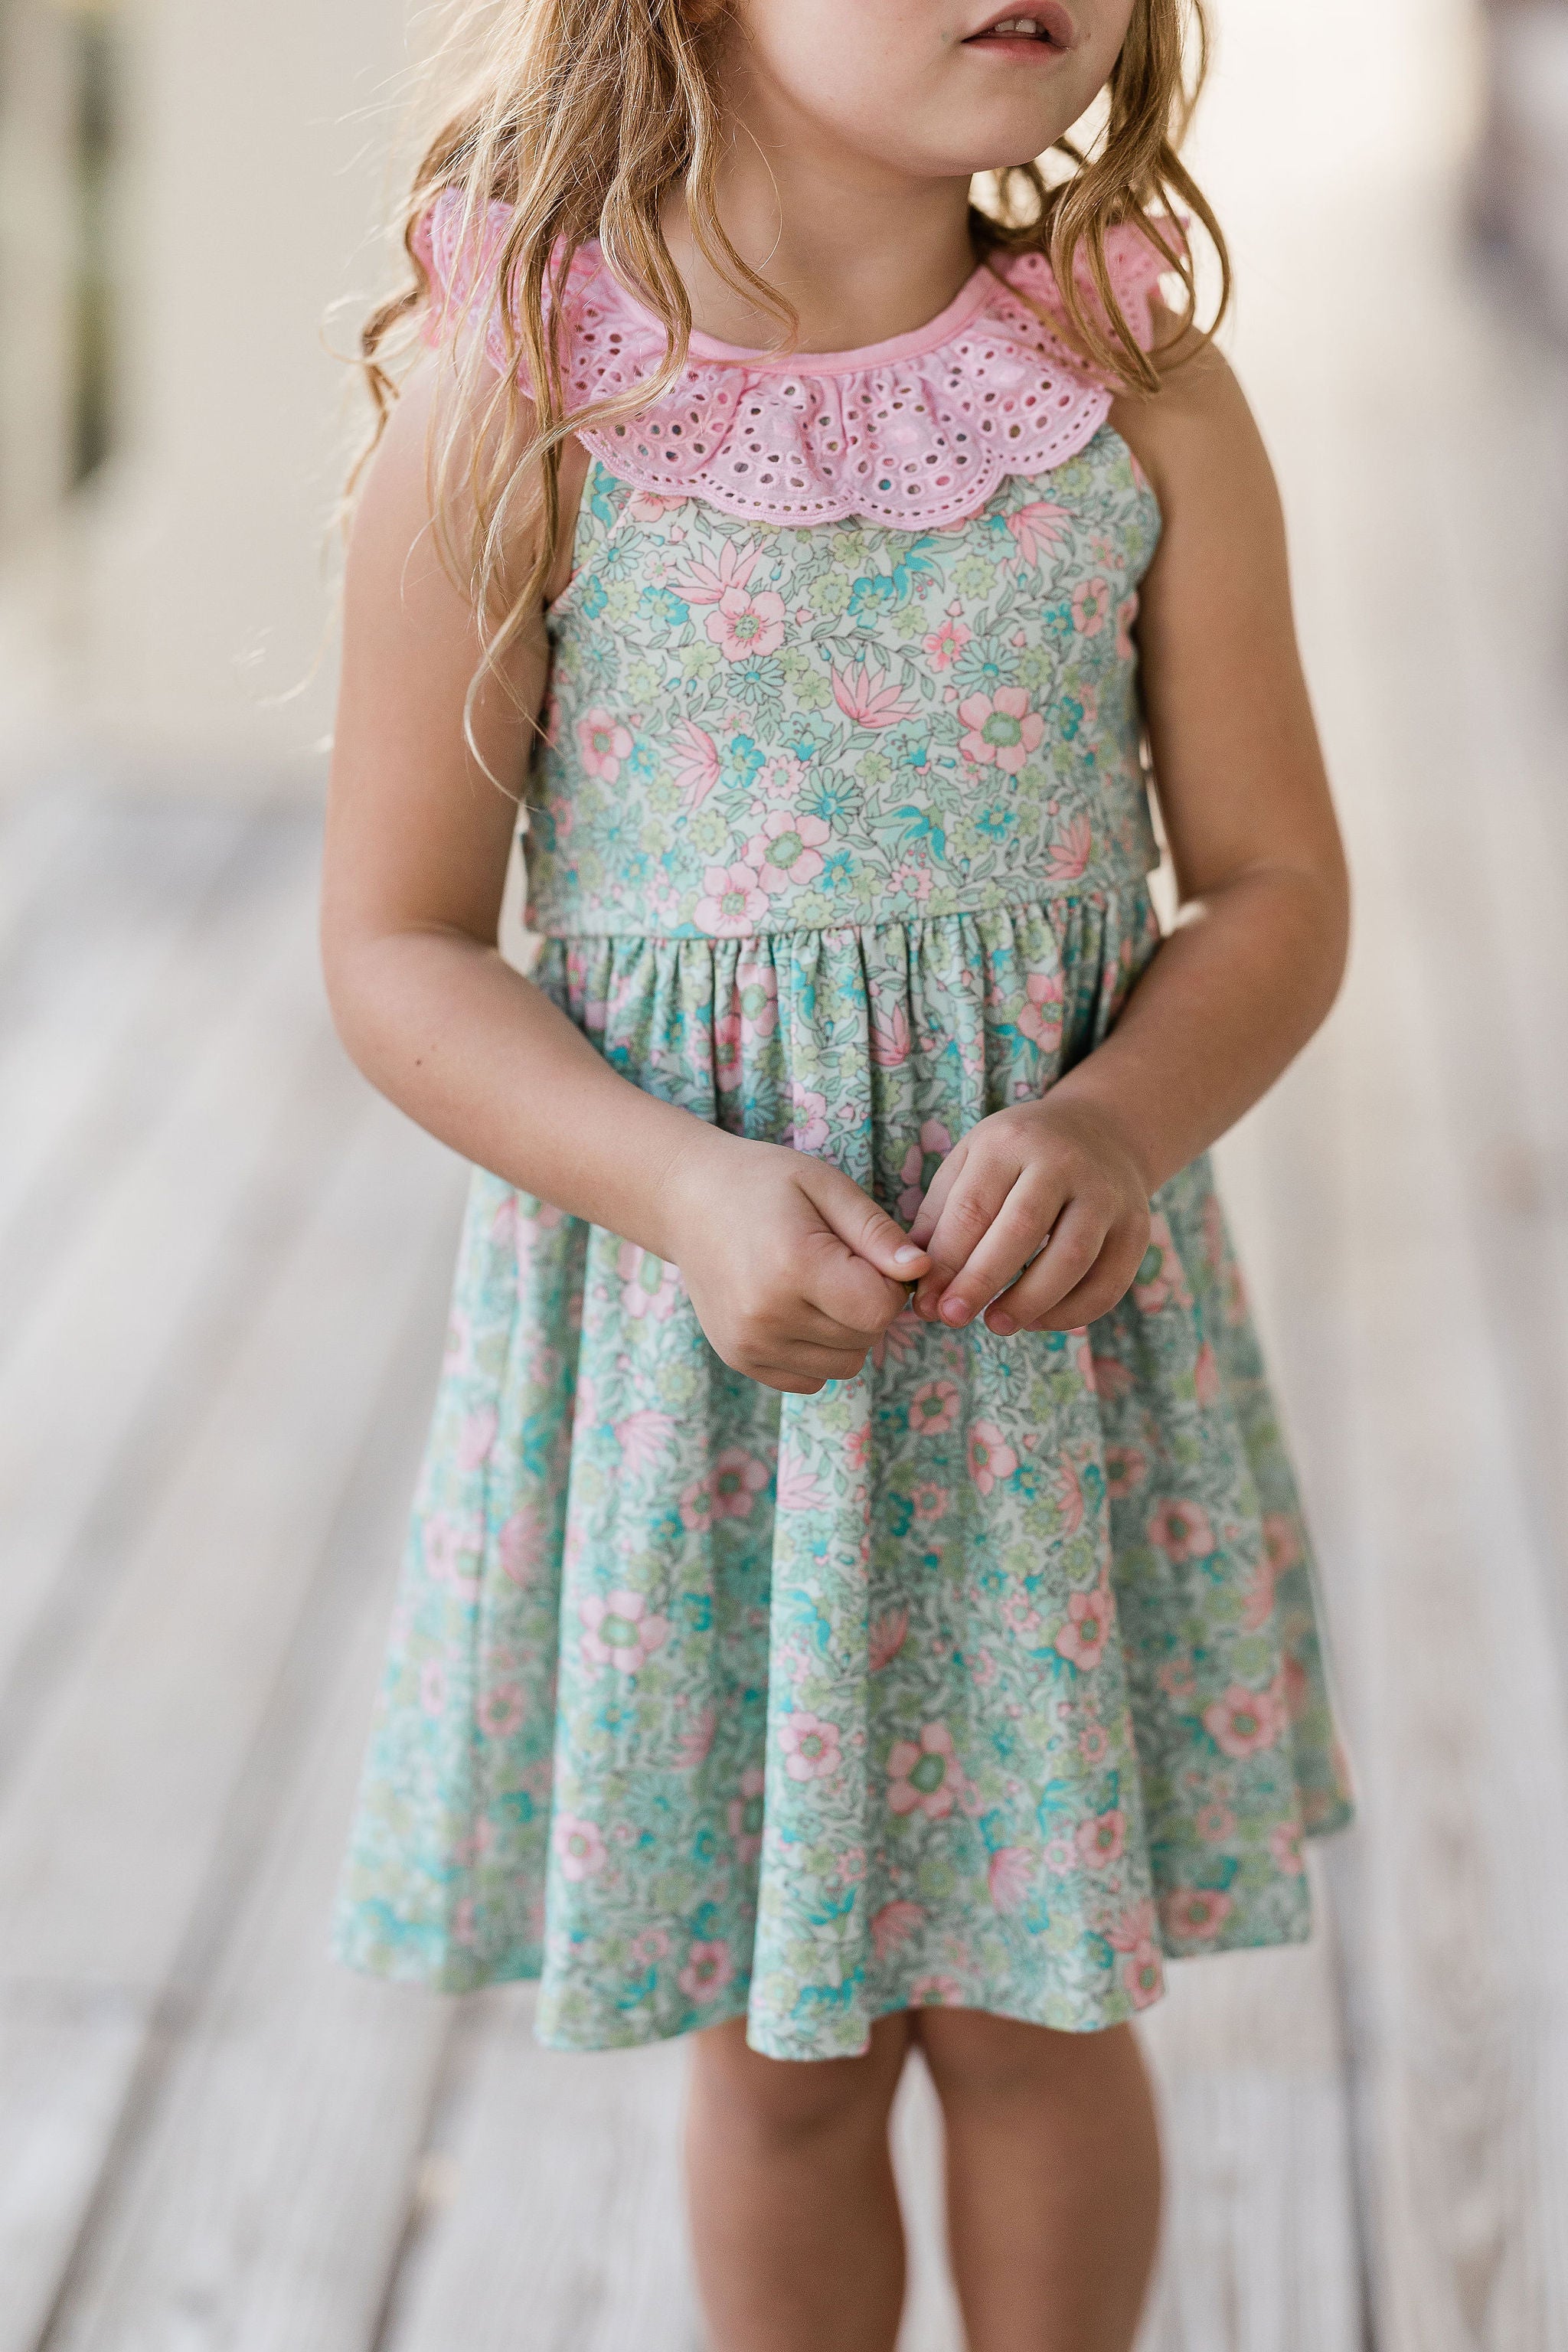 Penelope Knit Dress - Rose Water Blossom